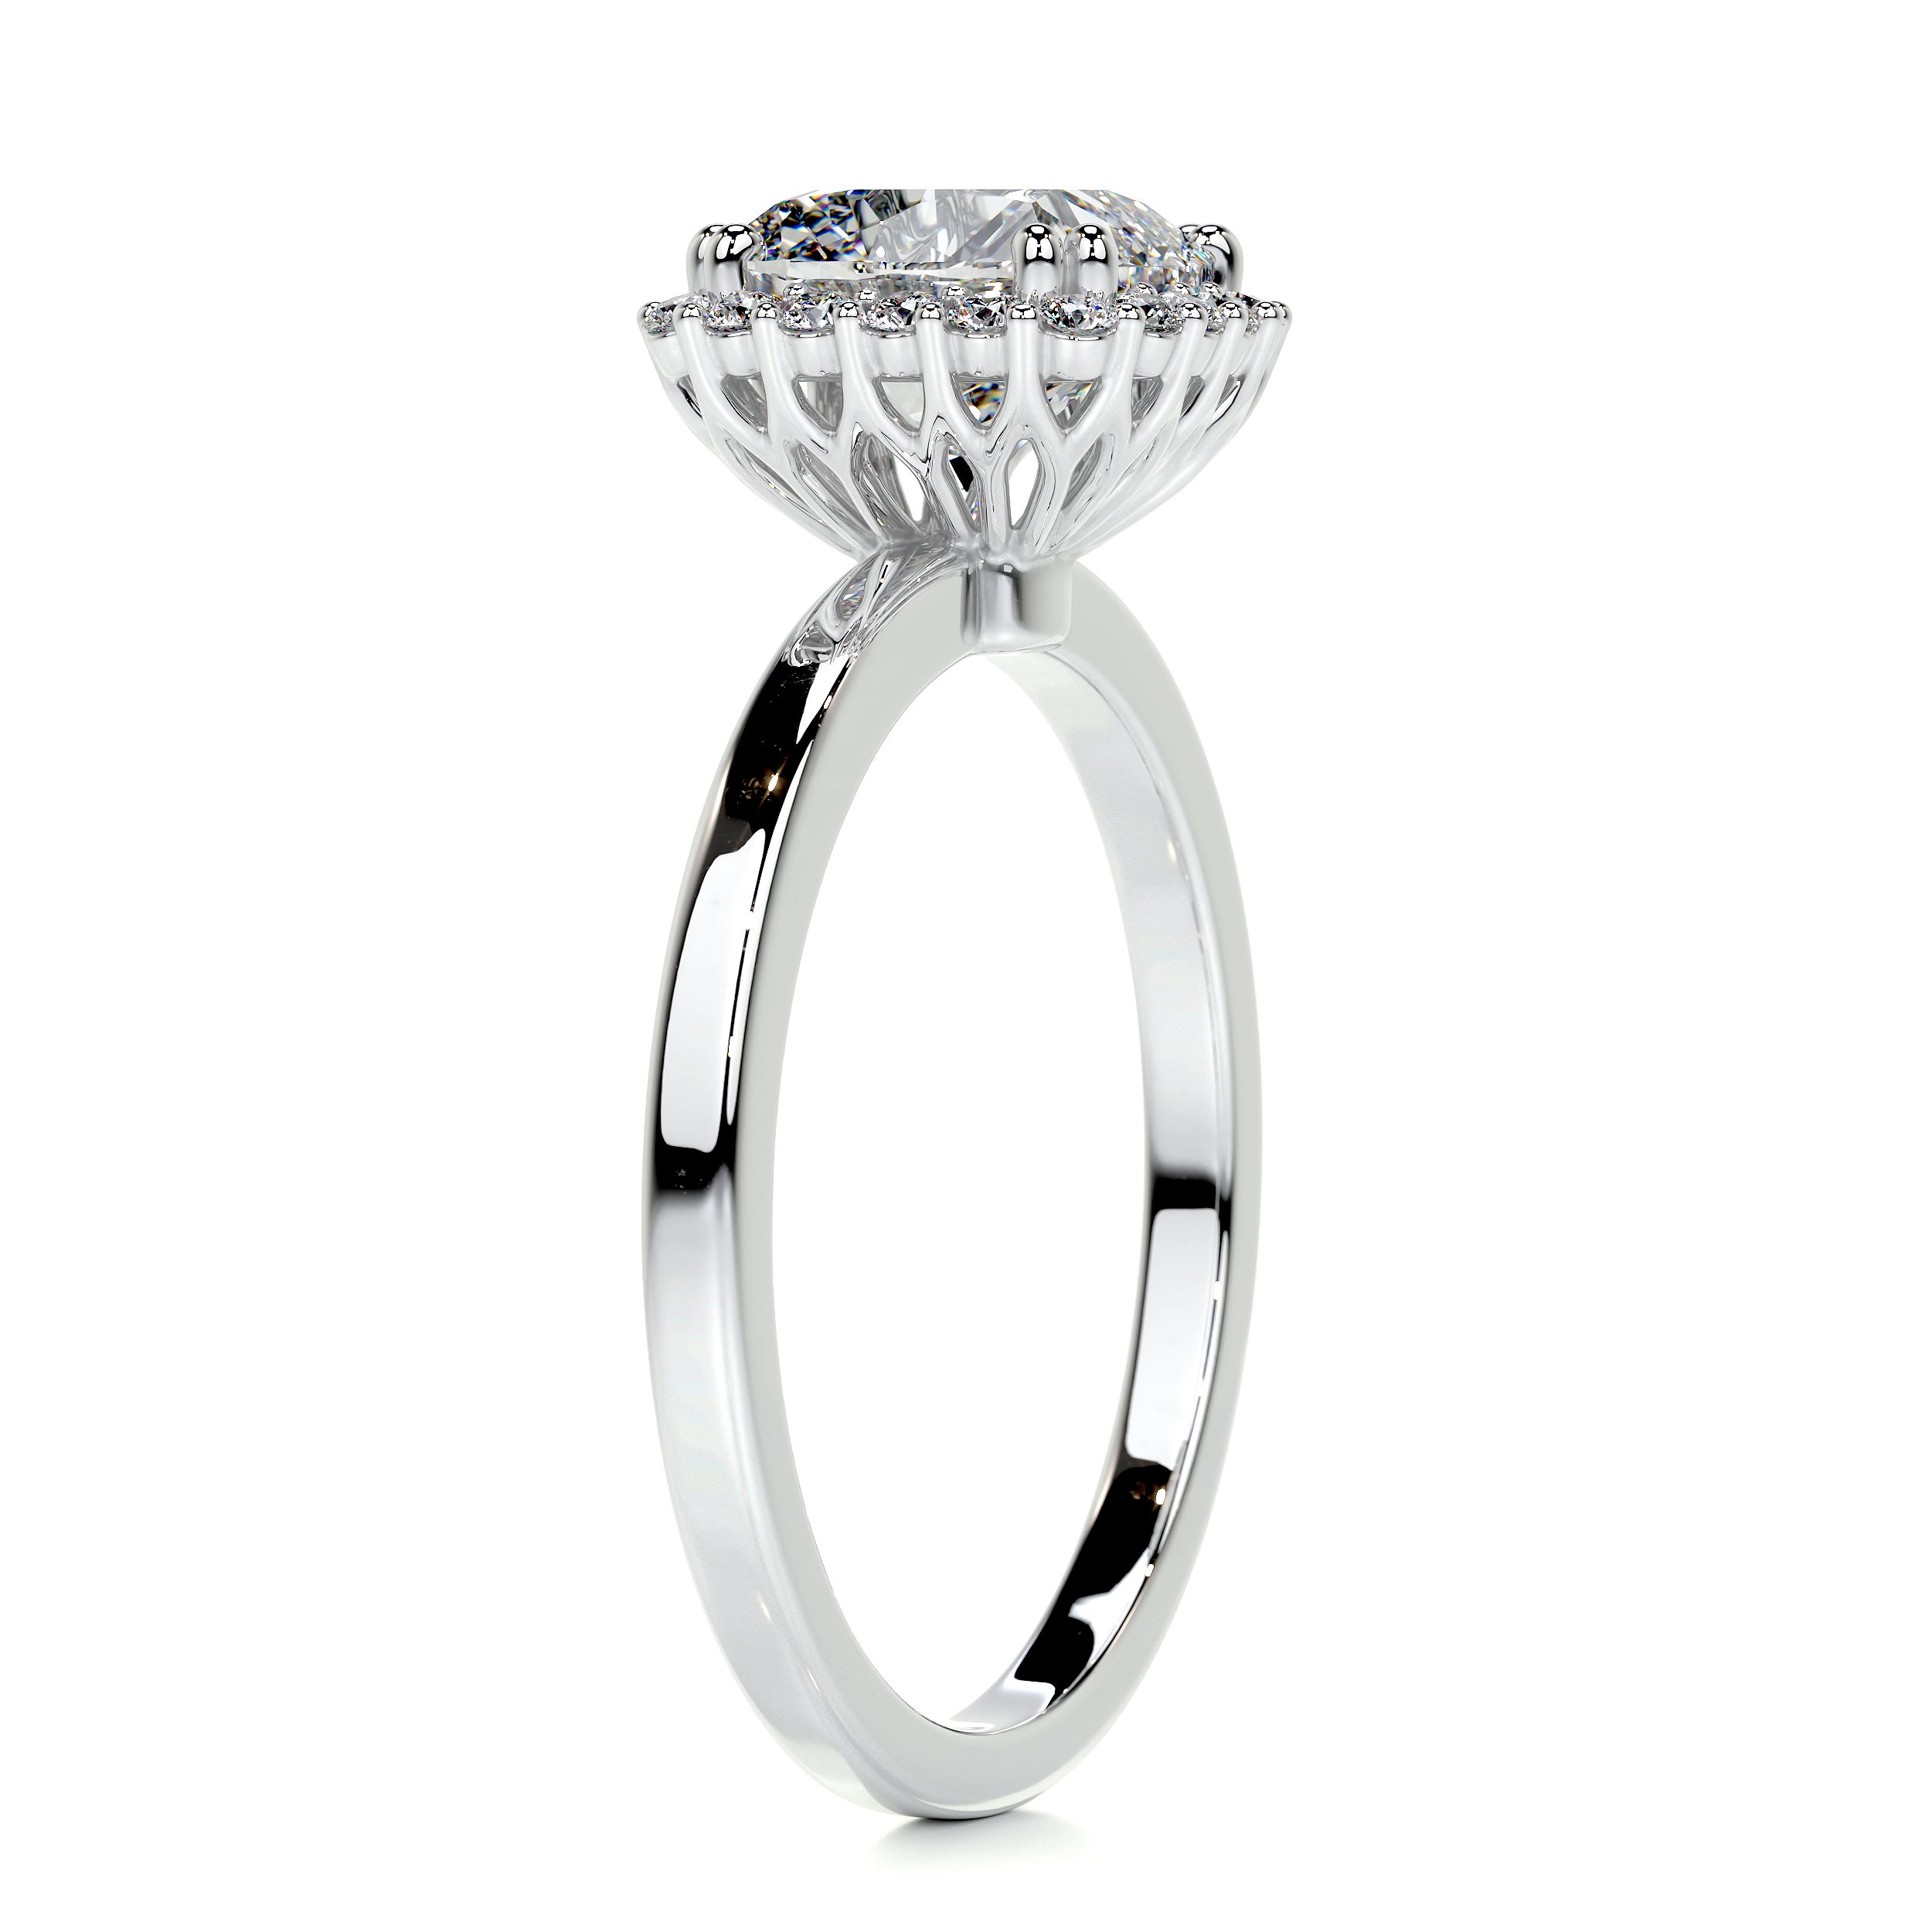 Emery Diamond Engagement Ring   (1.75 Carat) - 18K White Gold